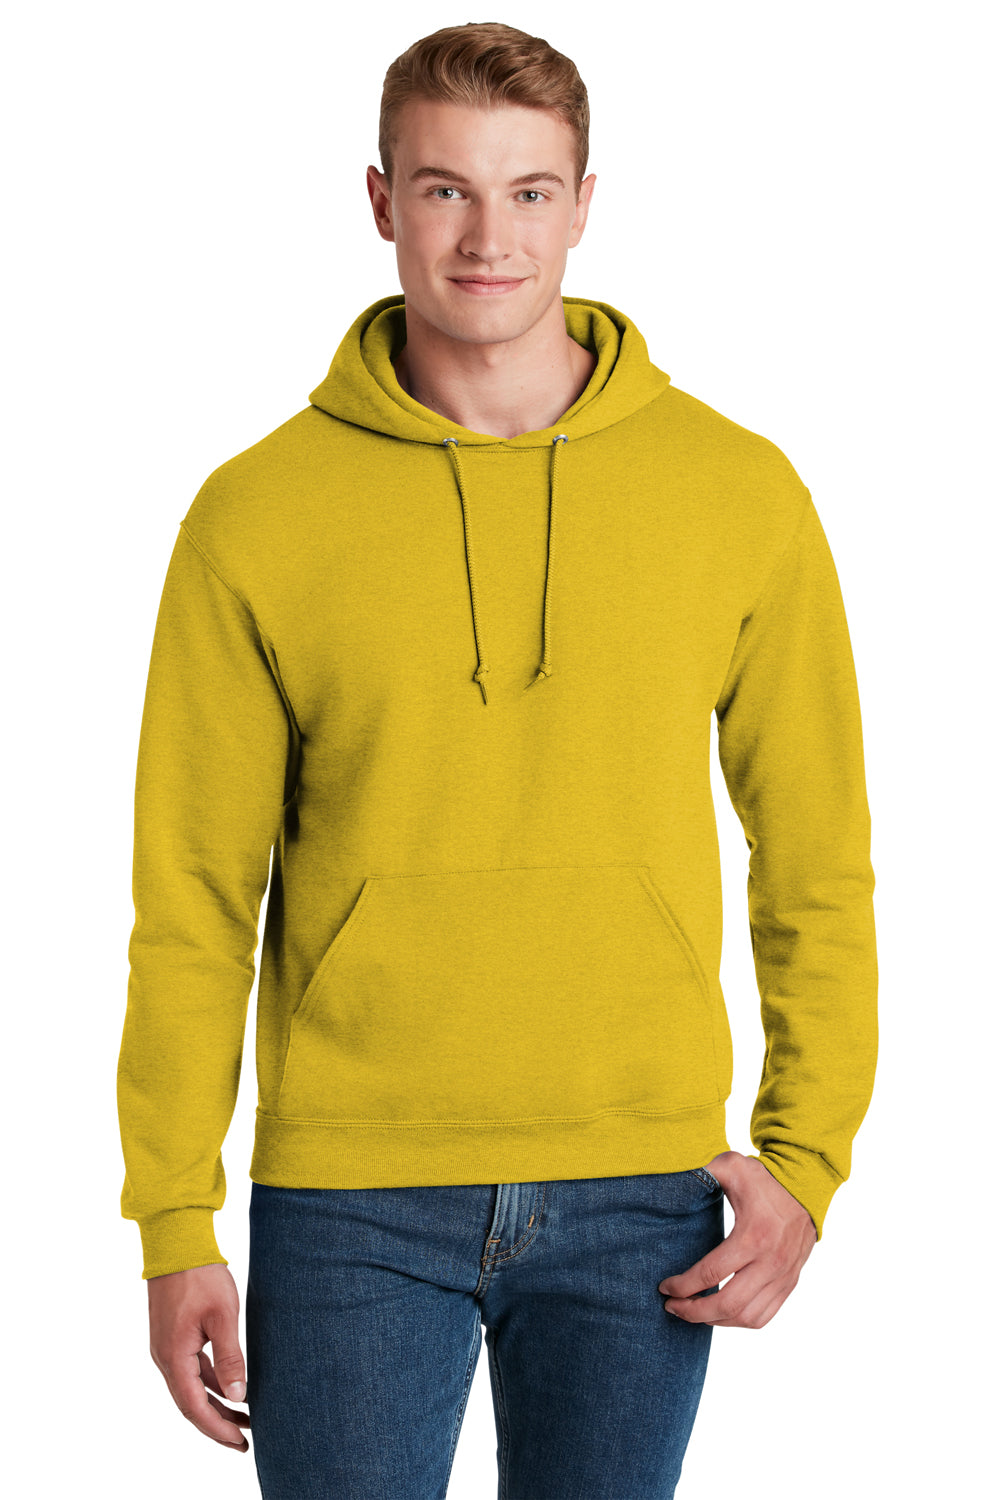 Jerzees 996M/996/996MR Mens NuBlend Fleece Hooded Sweatshirt Hoodie Heather Mustard Yellow Front